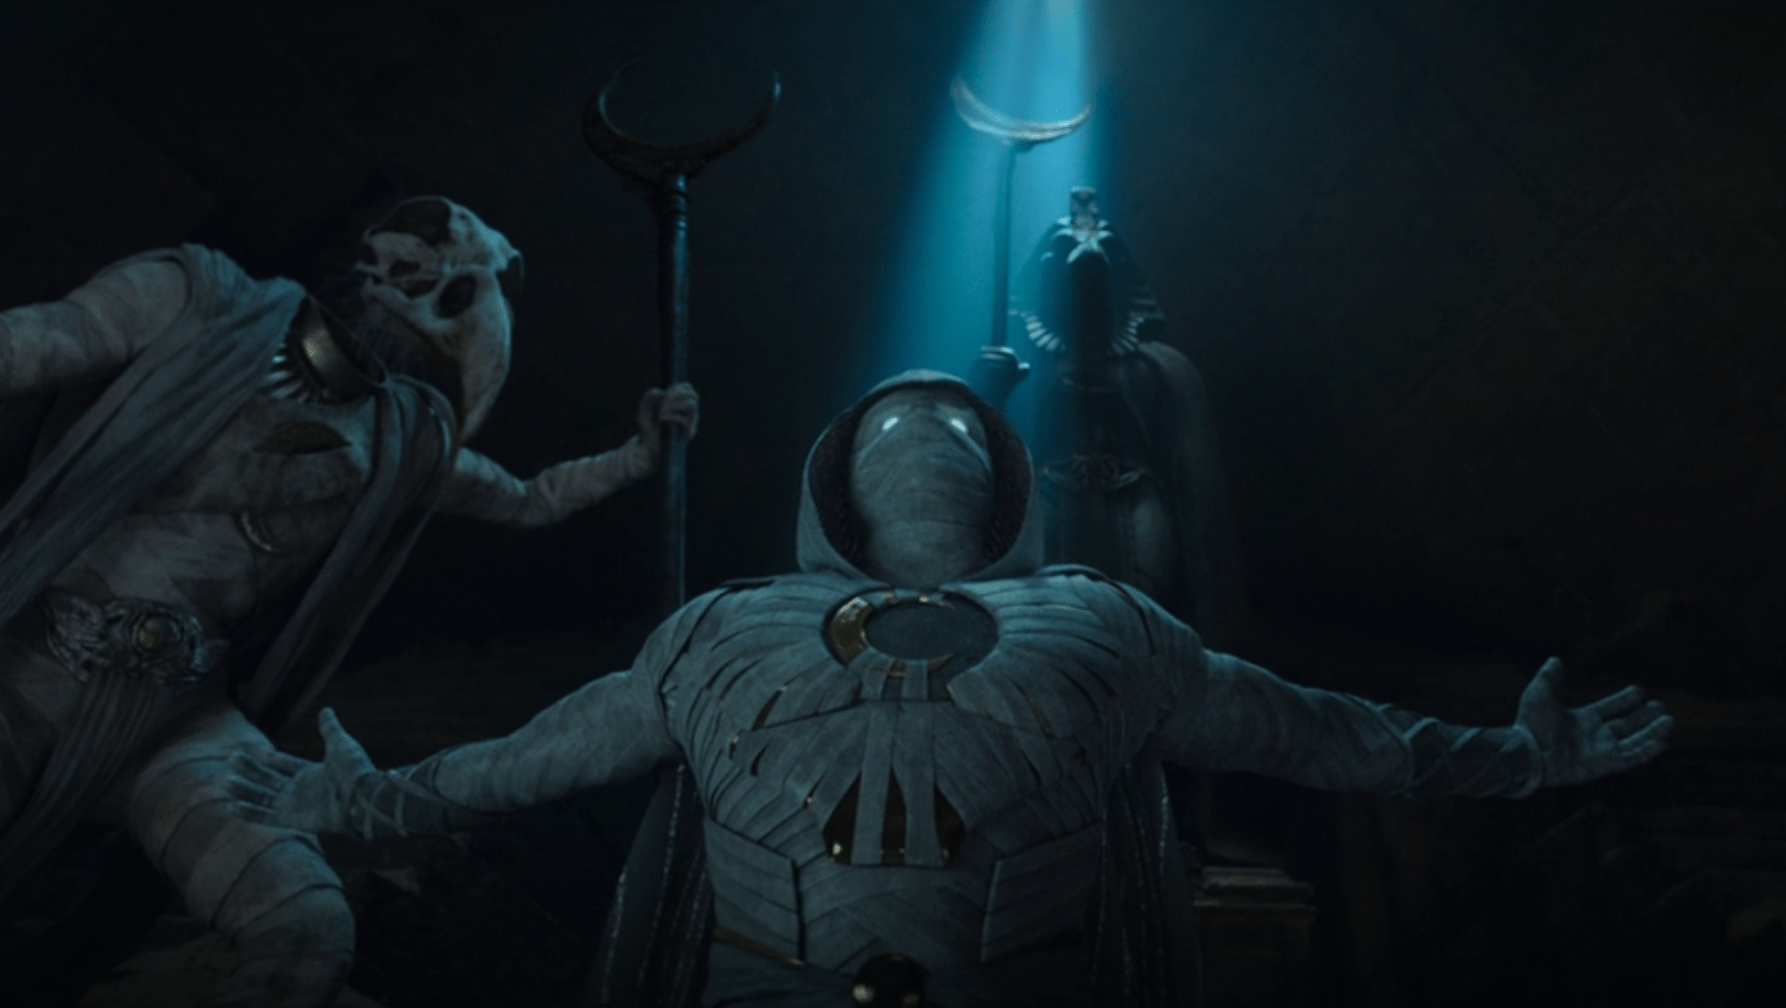 'Moon Knight' S1E5 'Asylum' focuses on identity and origin stories